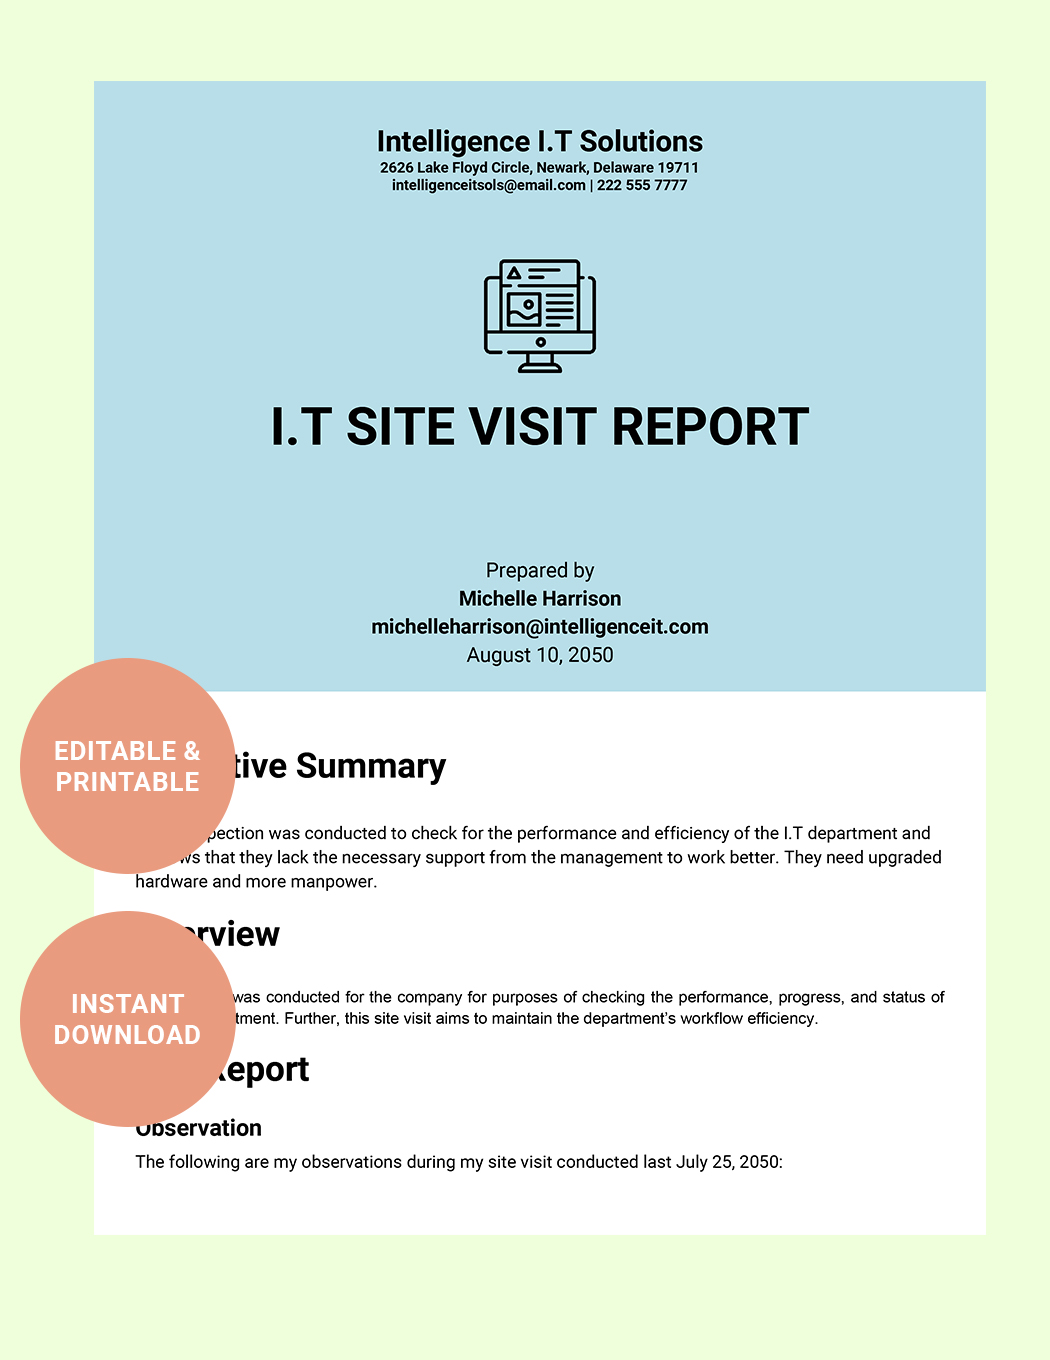 IT Site Visit Report Template